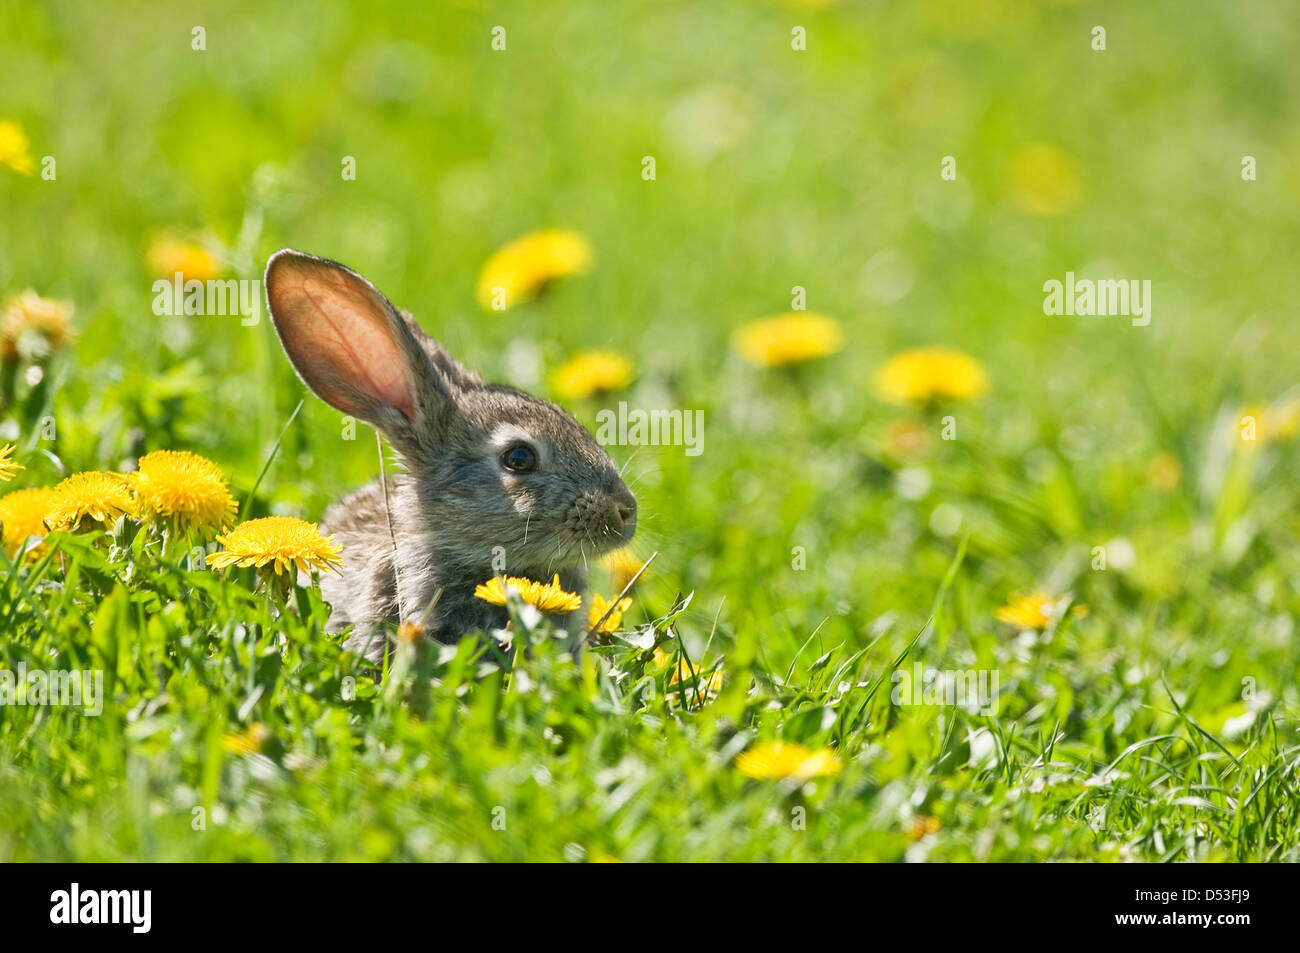 brown rabbit in grass closeup Stock Photo